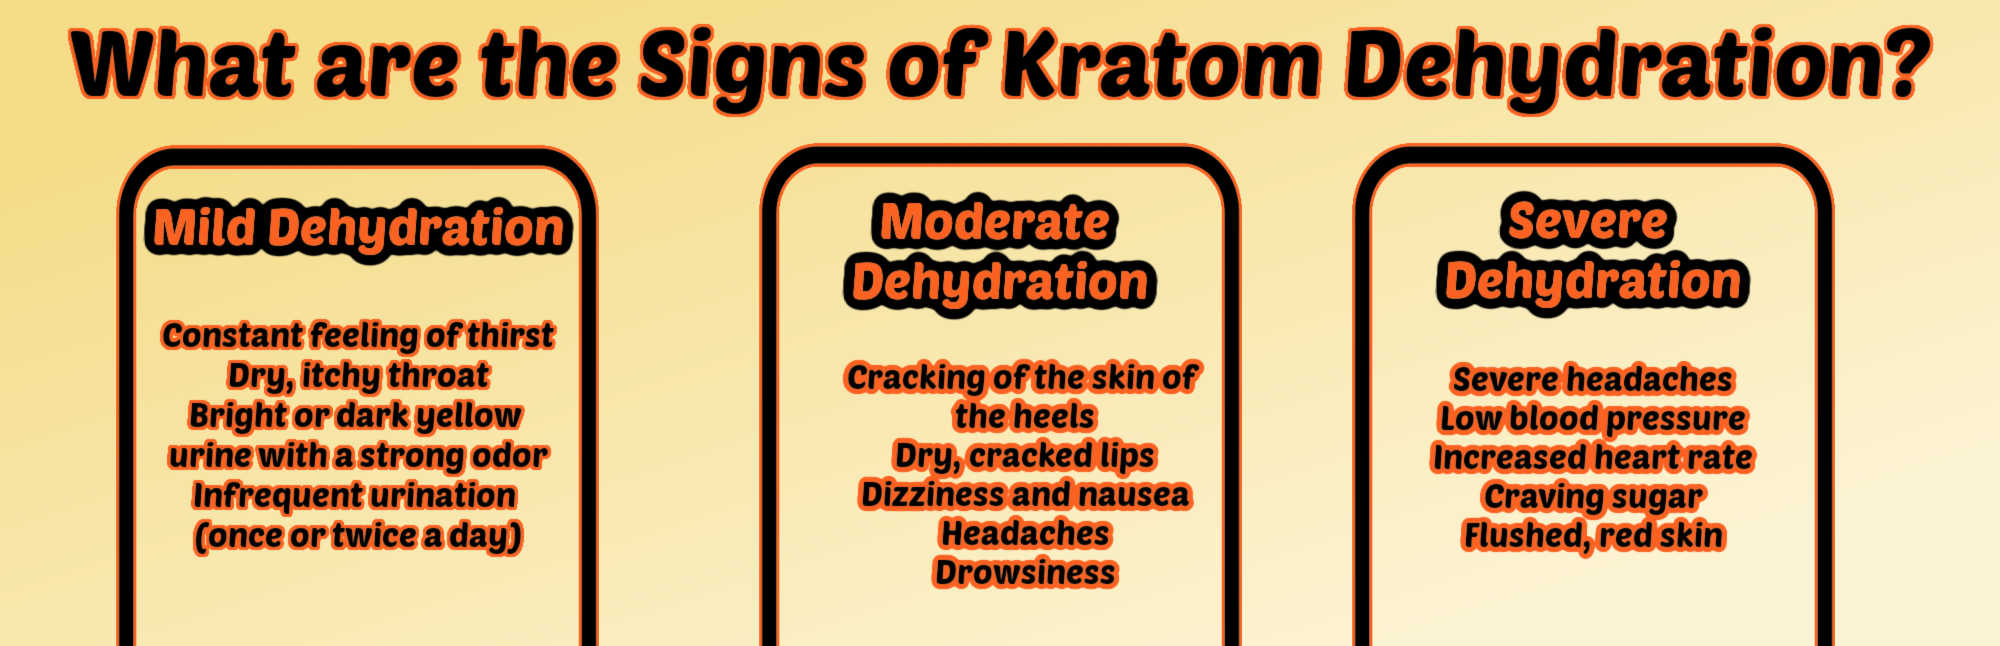 image of kratom dehydration signs